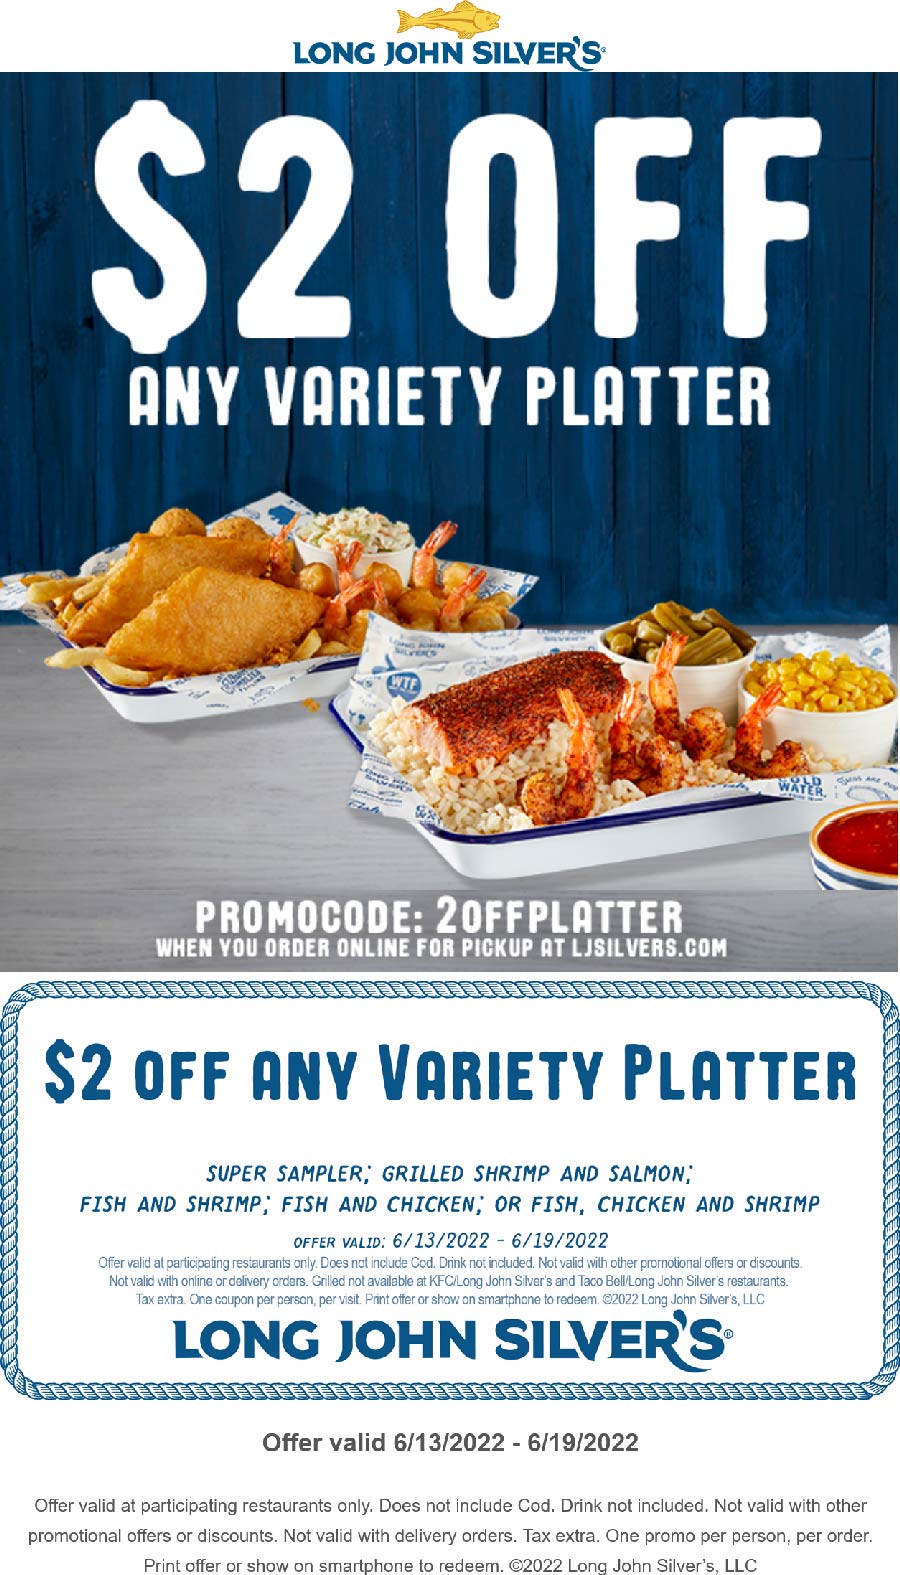 Long John Silvers restaurants Coupon  $2 off any variety platter at Long John Silvers restaurants #longjohnsilvers 